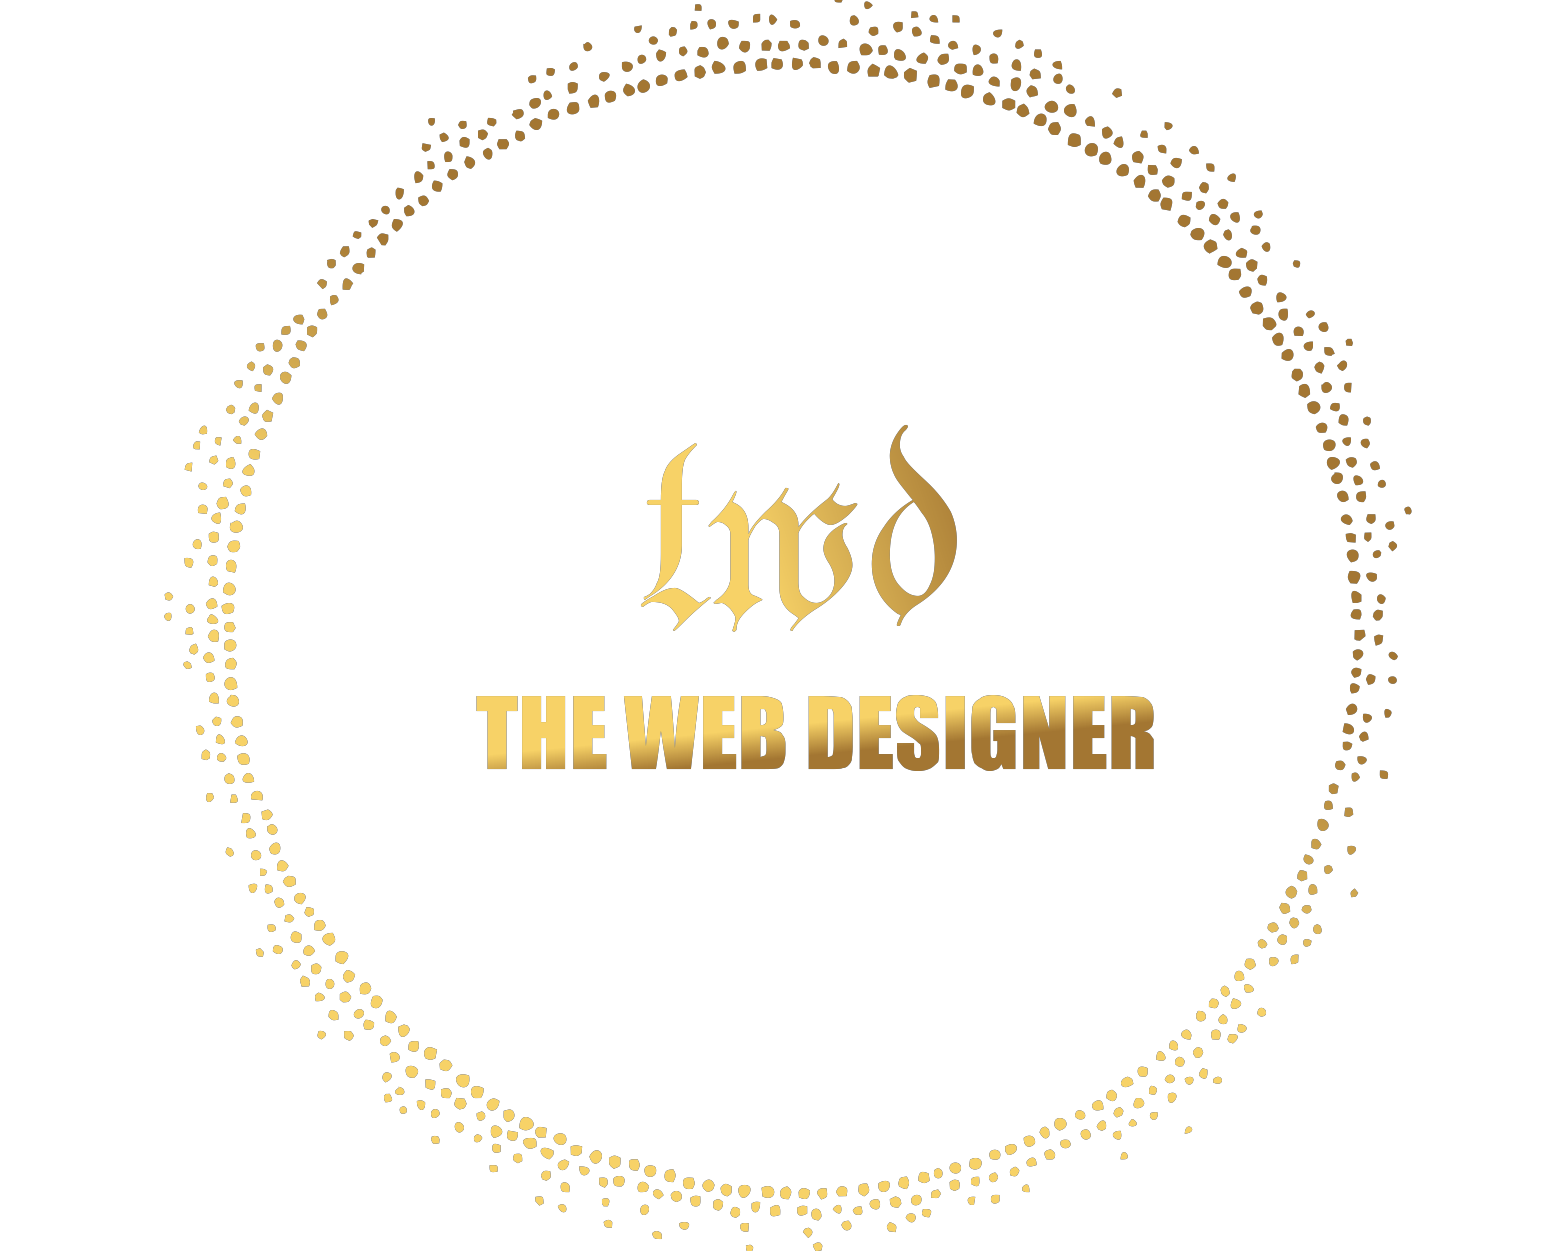 The web designer logo